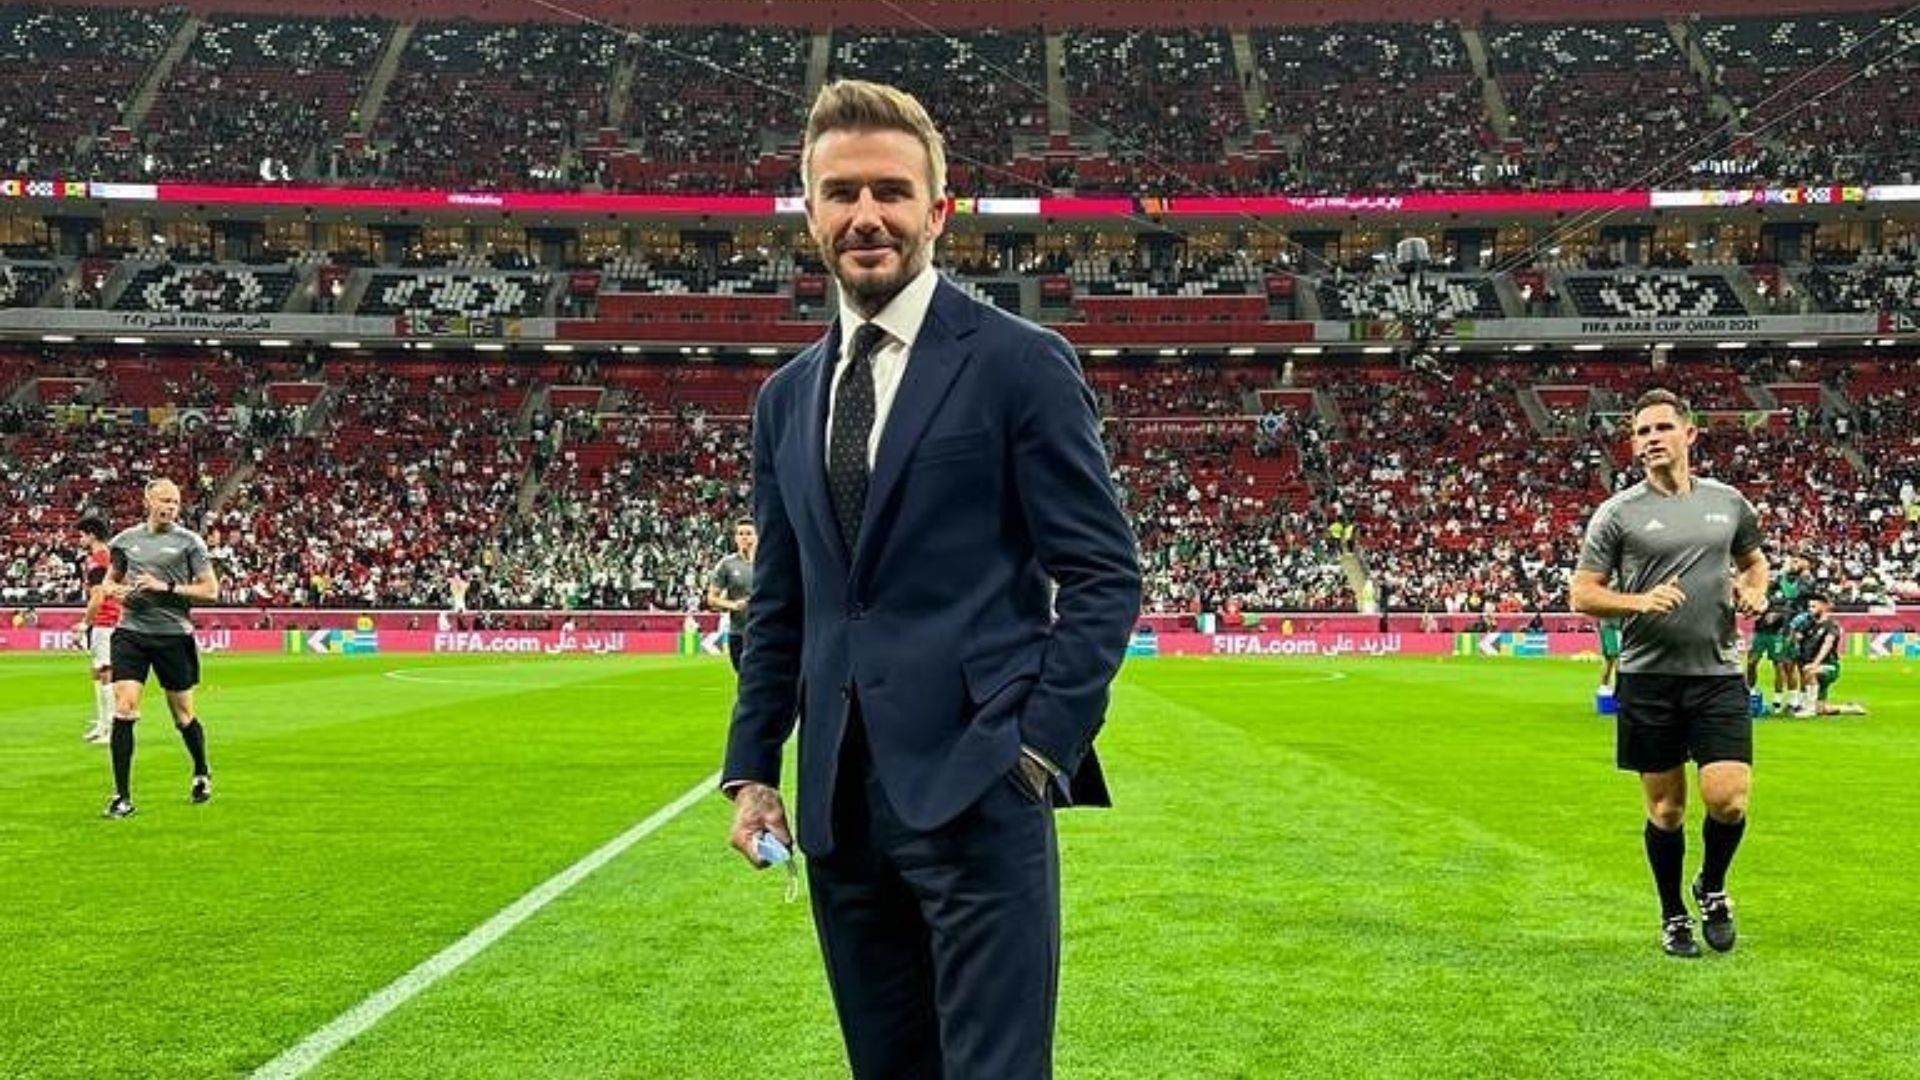 Celebrity investor: David Beckham